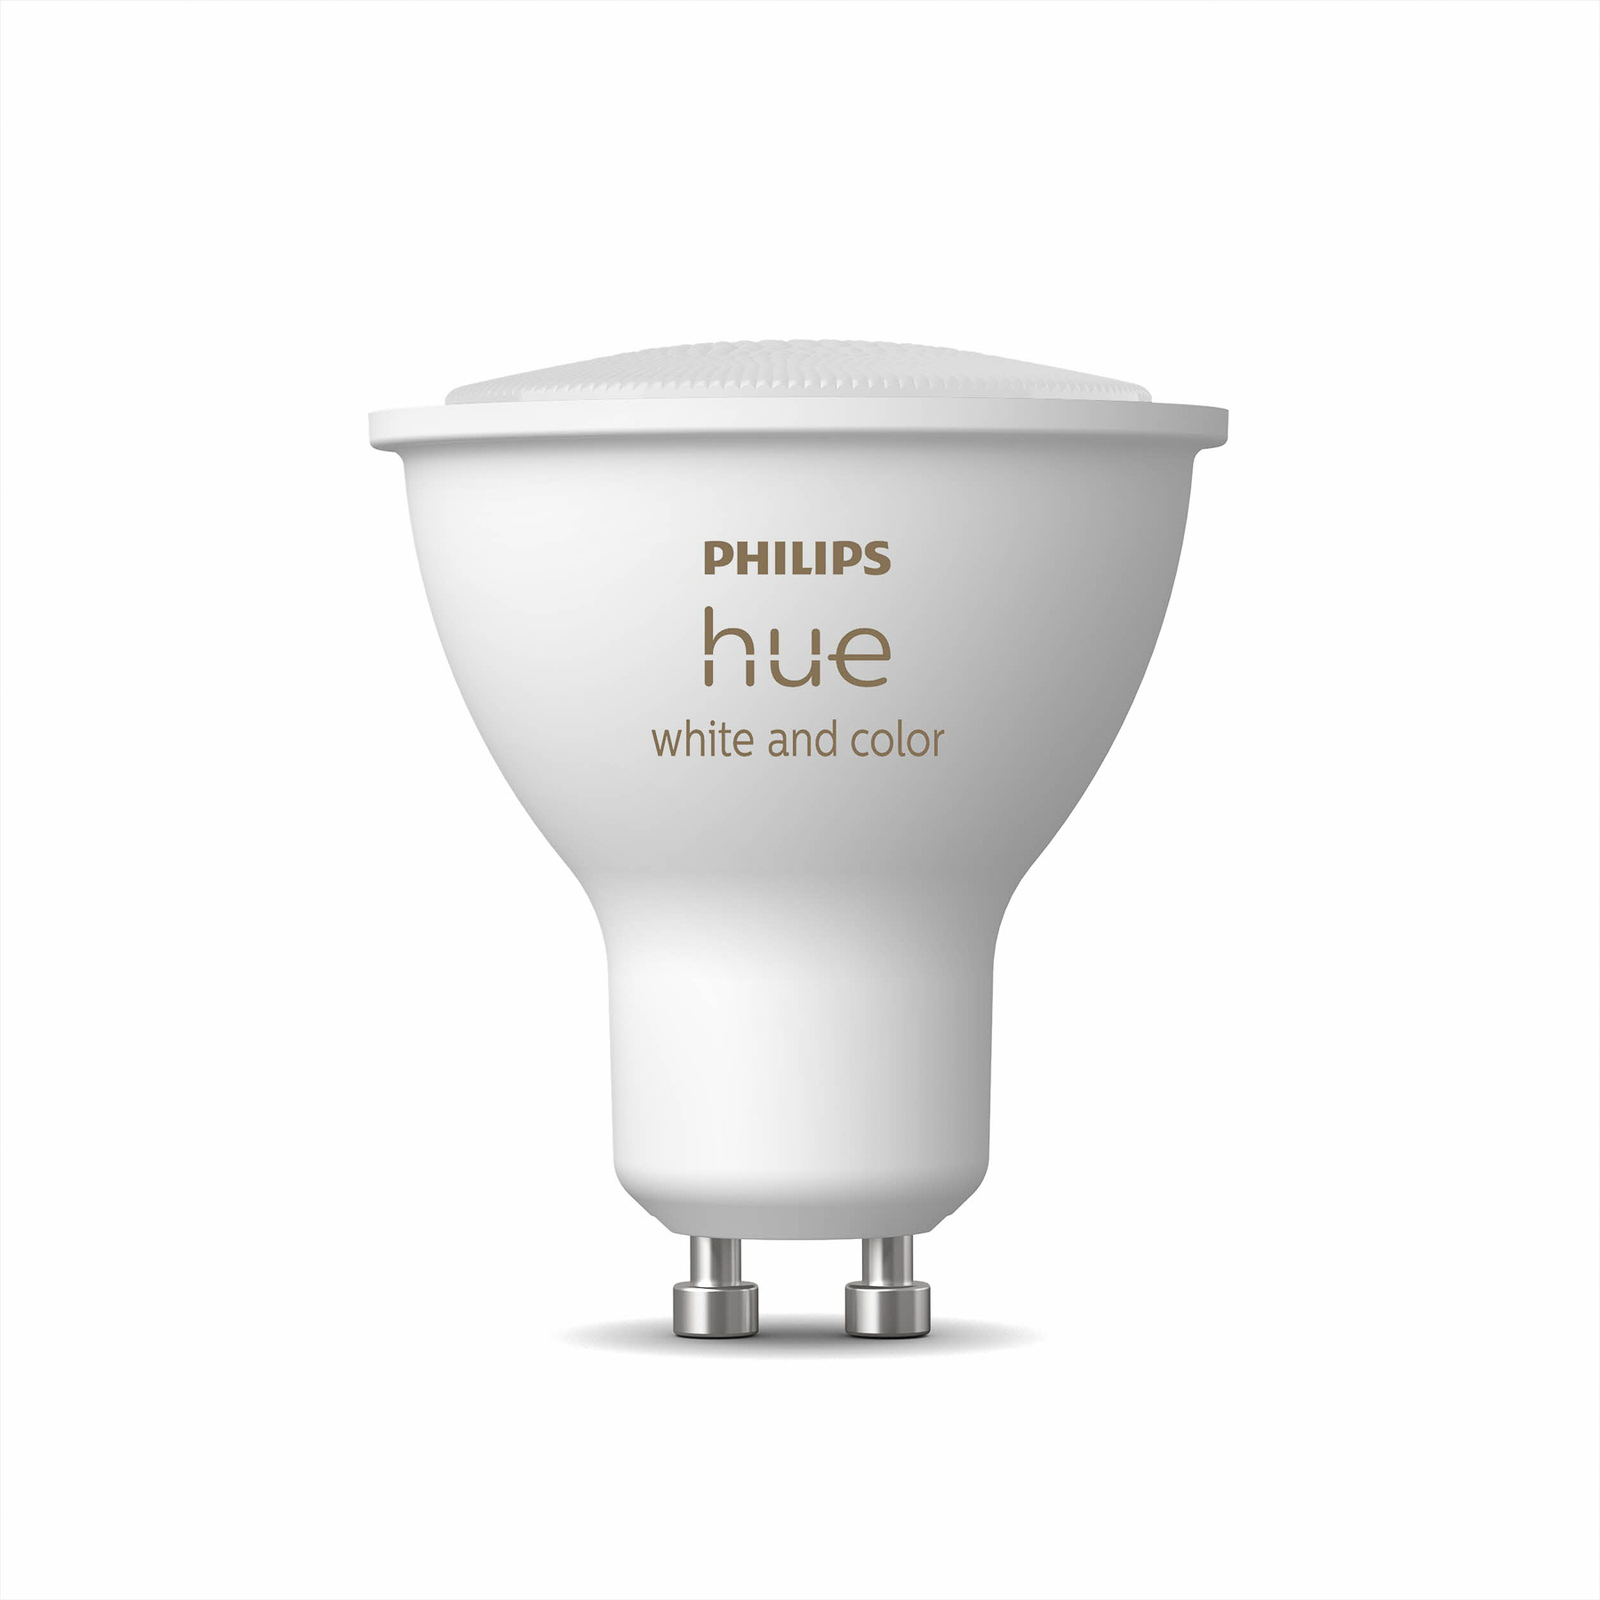 Philips Hue White & Color Ambiance 4.3 W GU10 LED